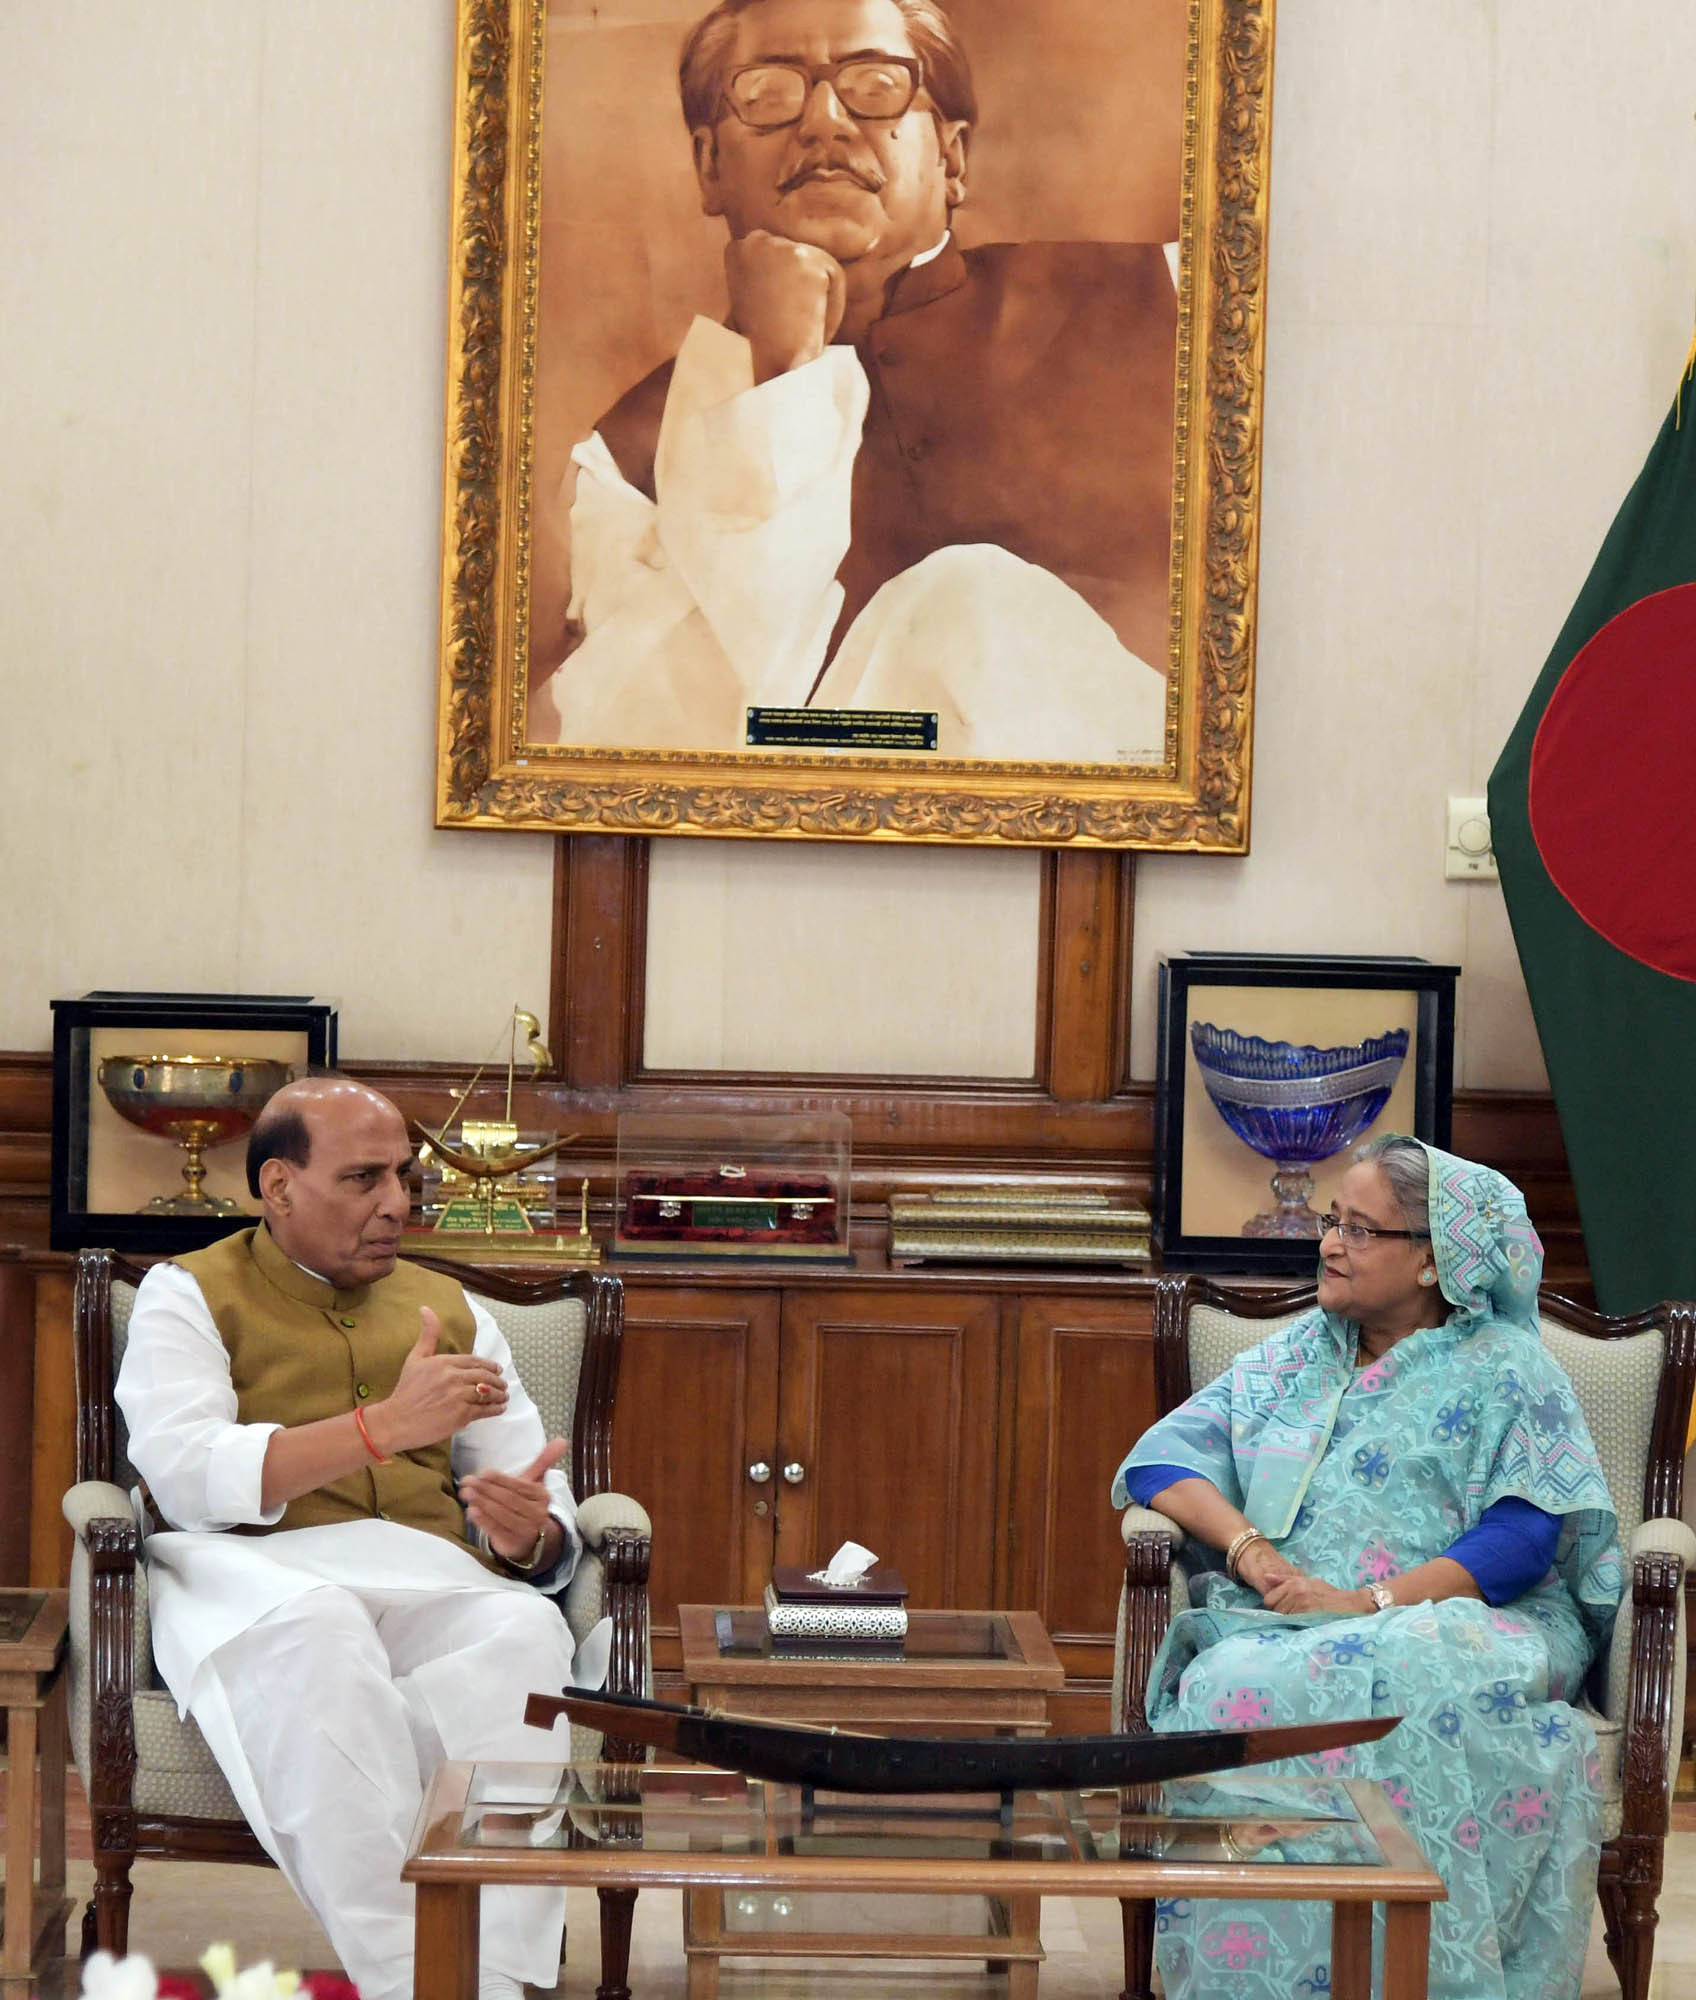 The Union Home Minister, Shri Rajnath Singh calling on the Prime Minister of Bangladesh, Ms. Sheikh Hasina, in Dhaka, Bangladesh on July 14, 2018.